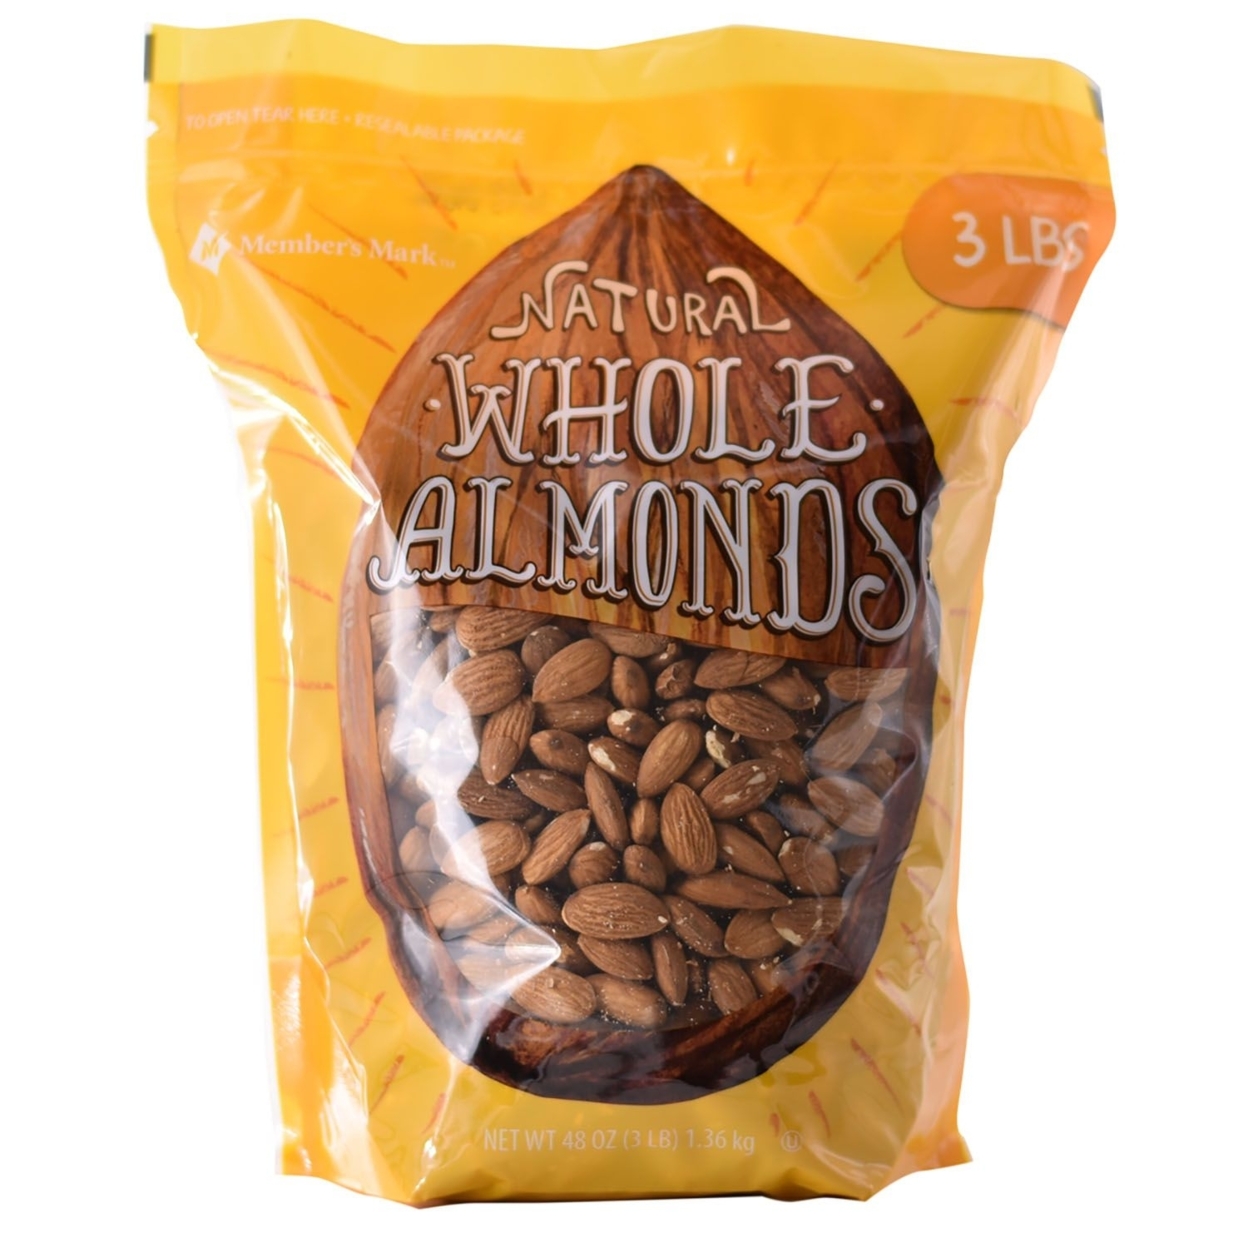 Member's Mark Whole Almonds (3 Pounds)